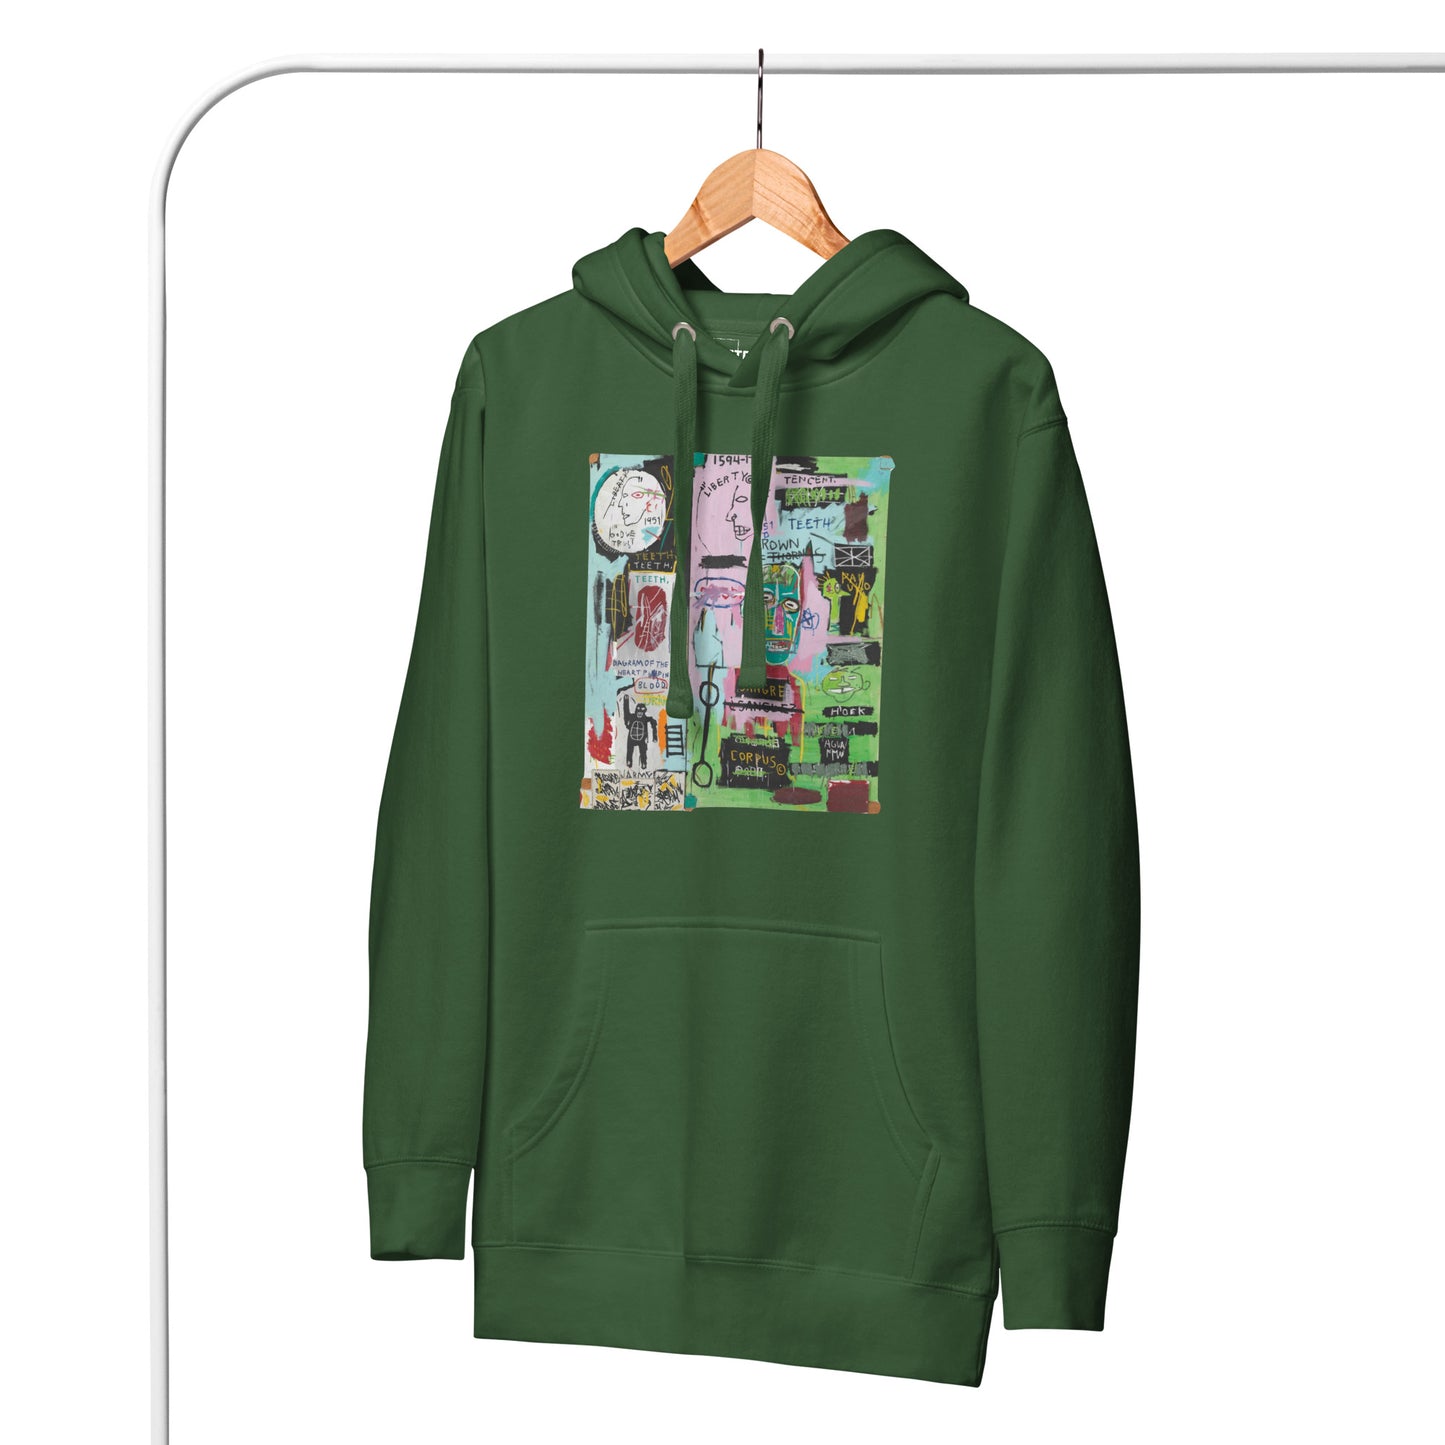 Jean-Michel Basquiat "In Italian" Artwork Printed Premium Streetwear Sweatshirt Hoodie Forest Green